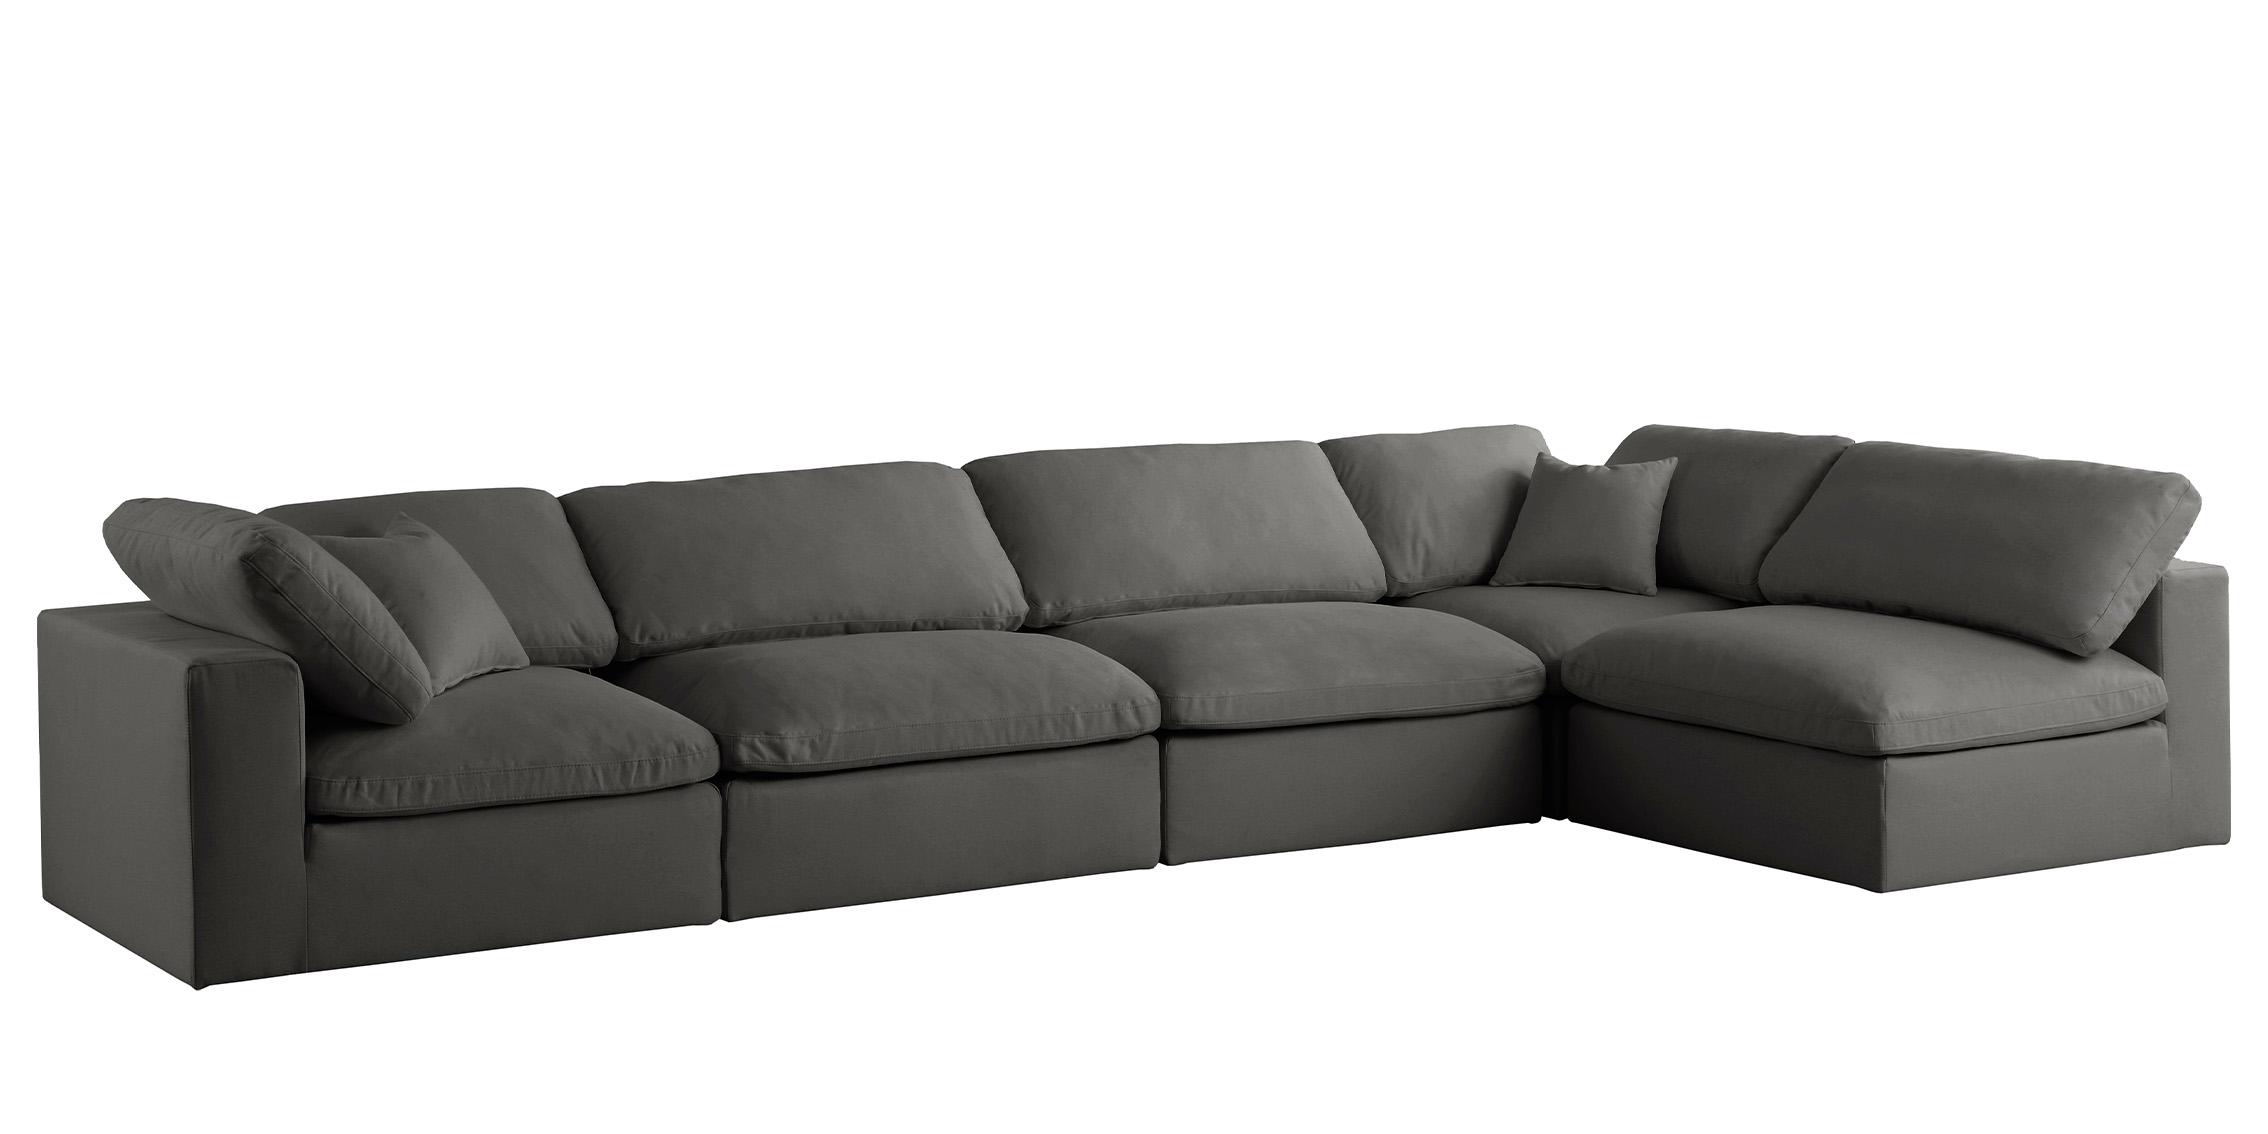 Contemporary, Modern Sectional Sofa 602Grey-Sec5D 602Grey-Sec5D in Gray Fabric